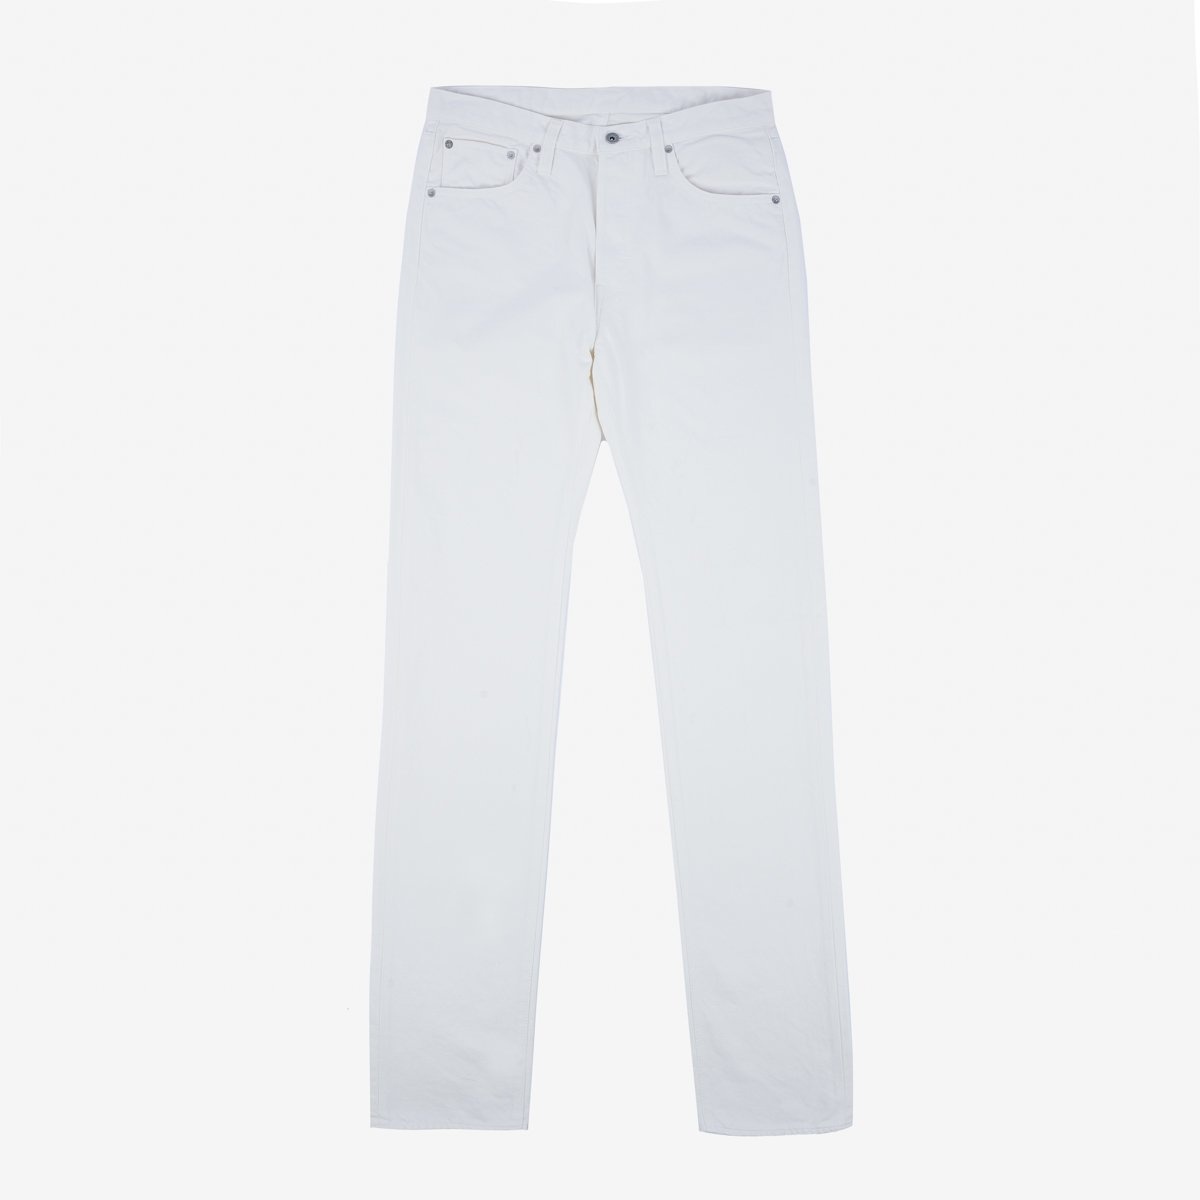 IH-666-WT 13.5oz Denim Slim Straight Cut Jeans - White - 1